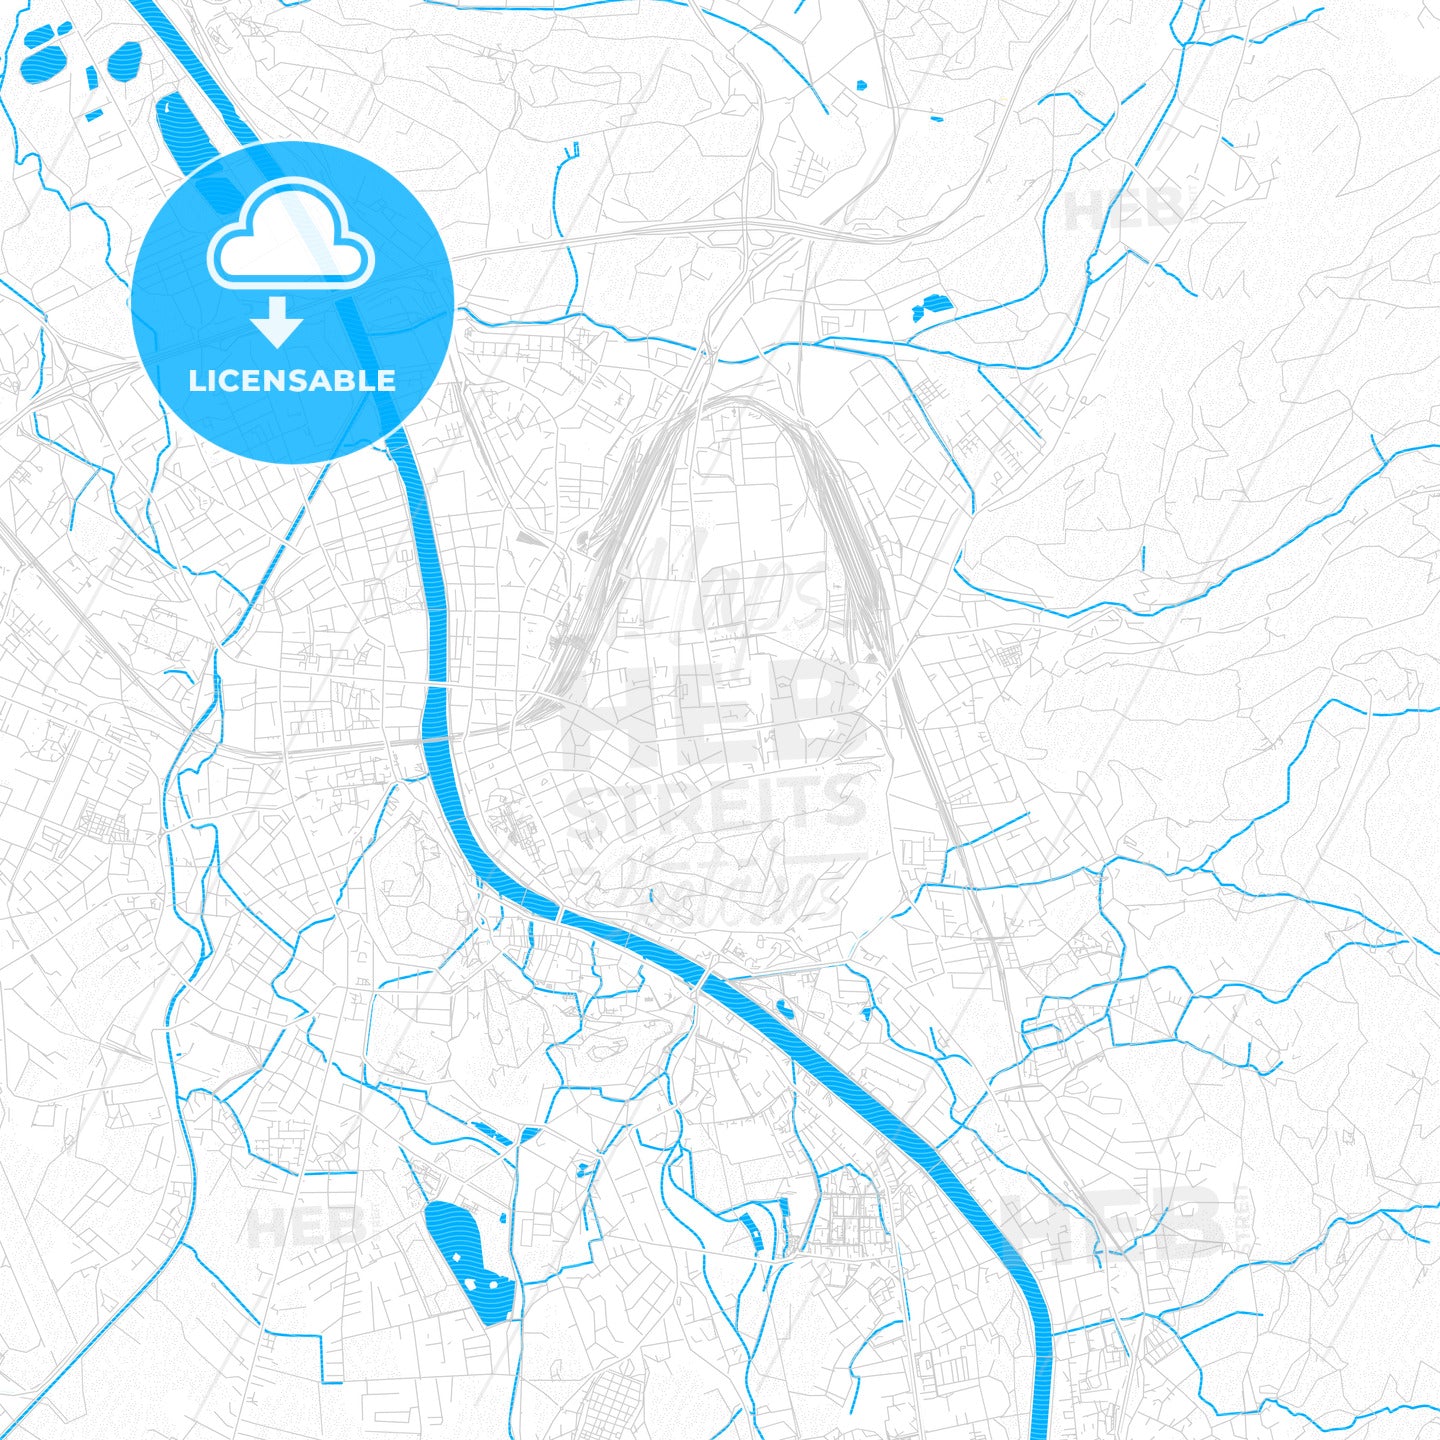 Salzburg, Austria PDF vector map with water in focus